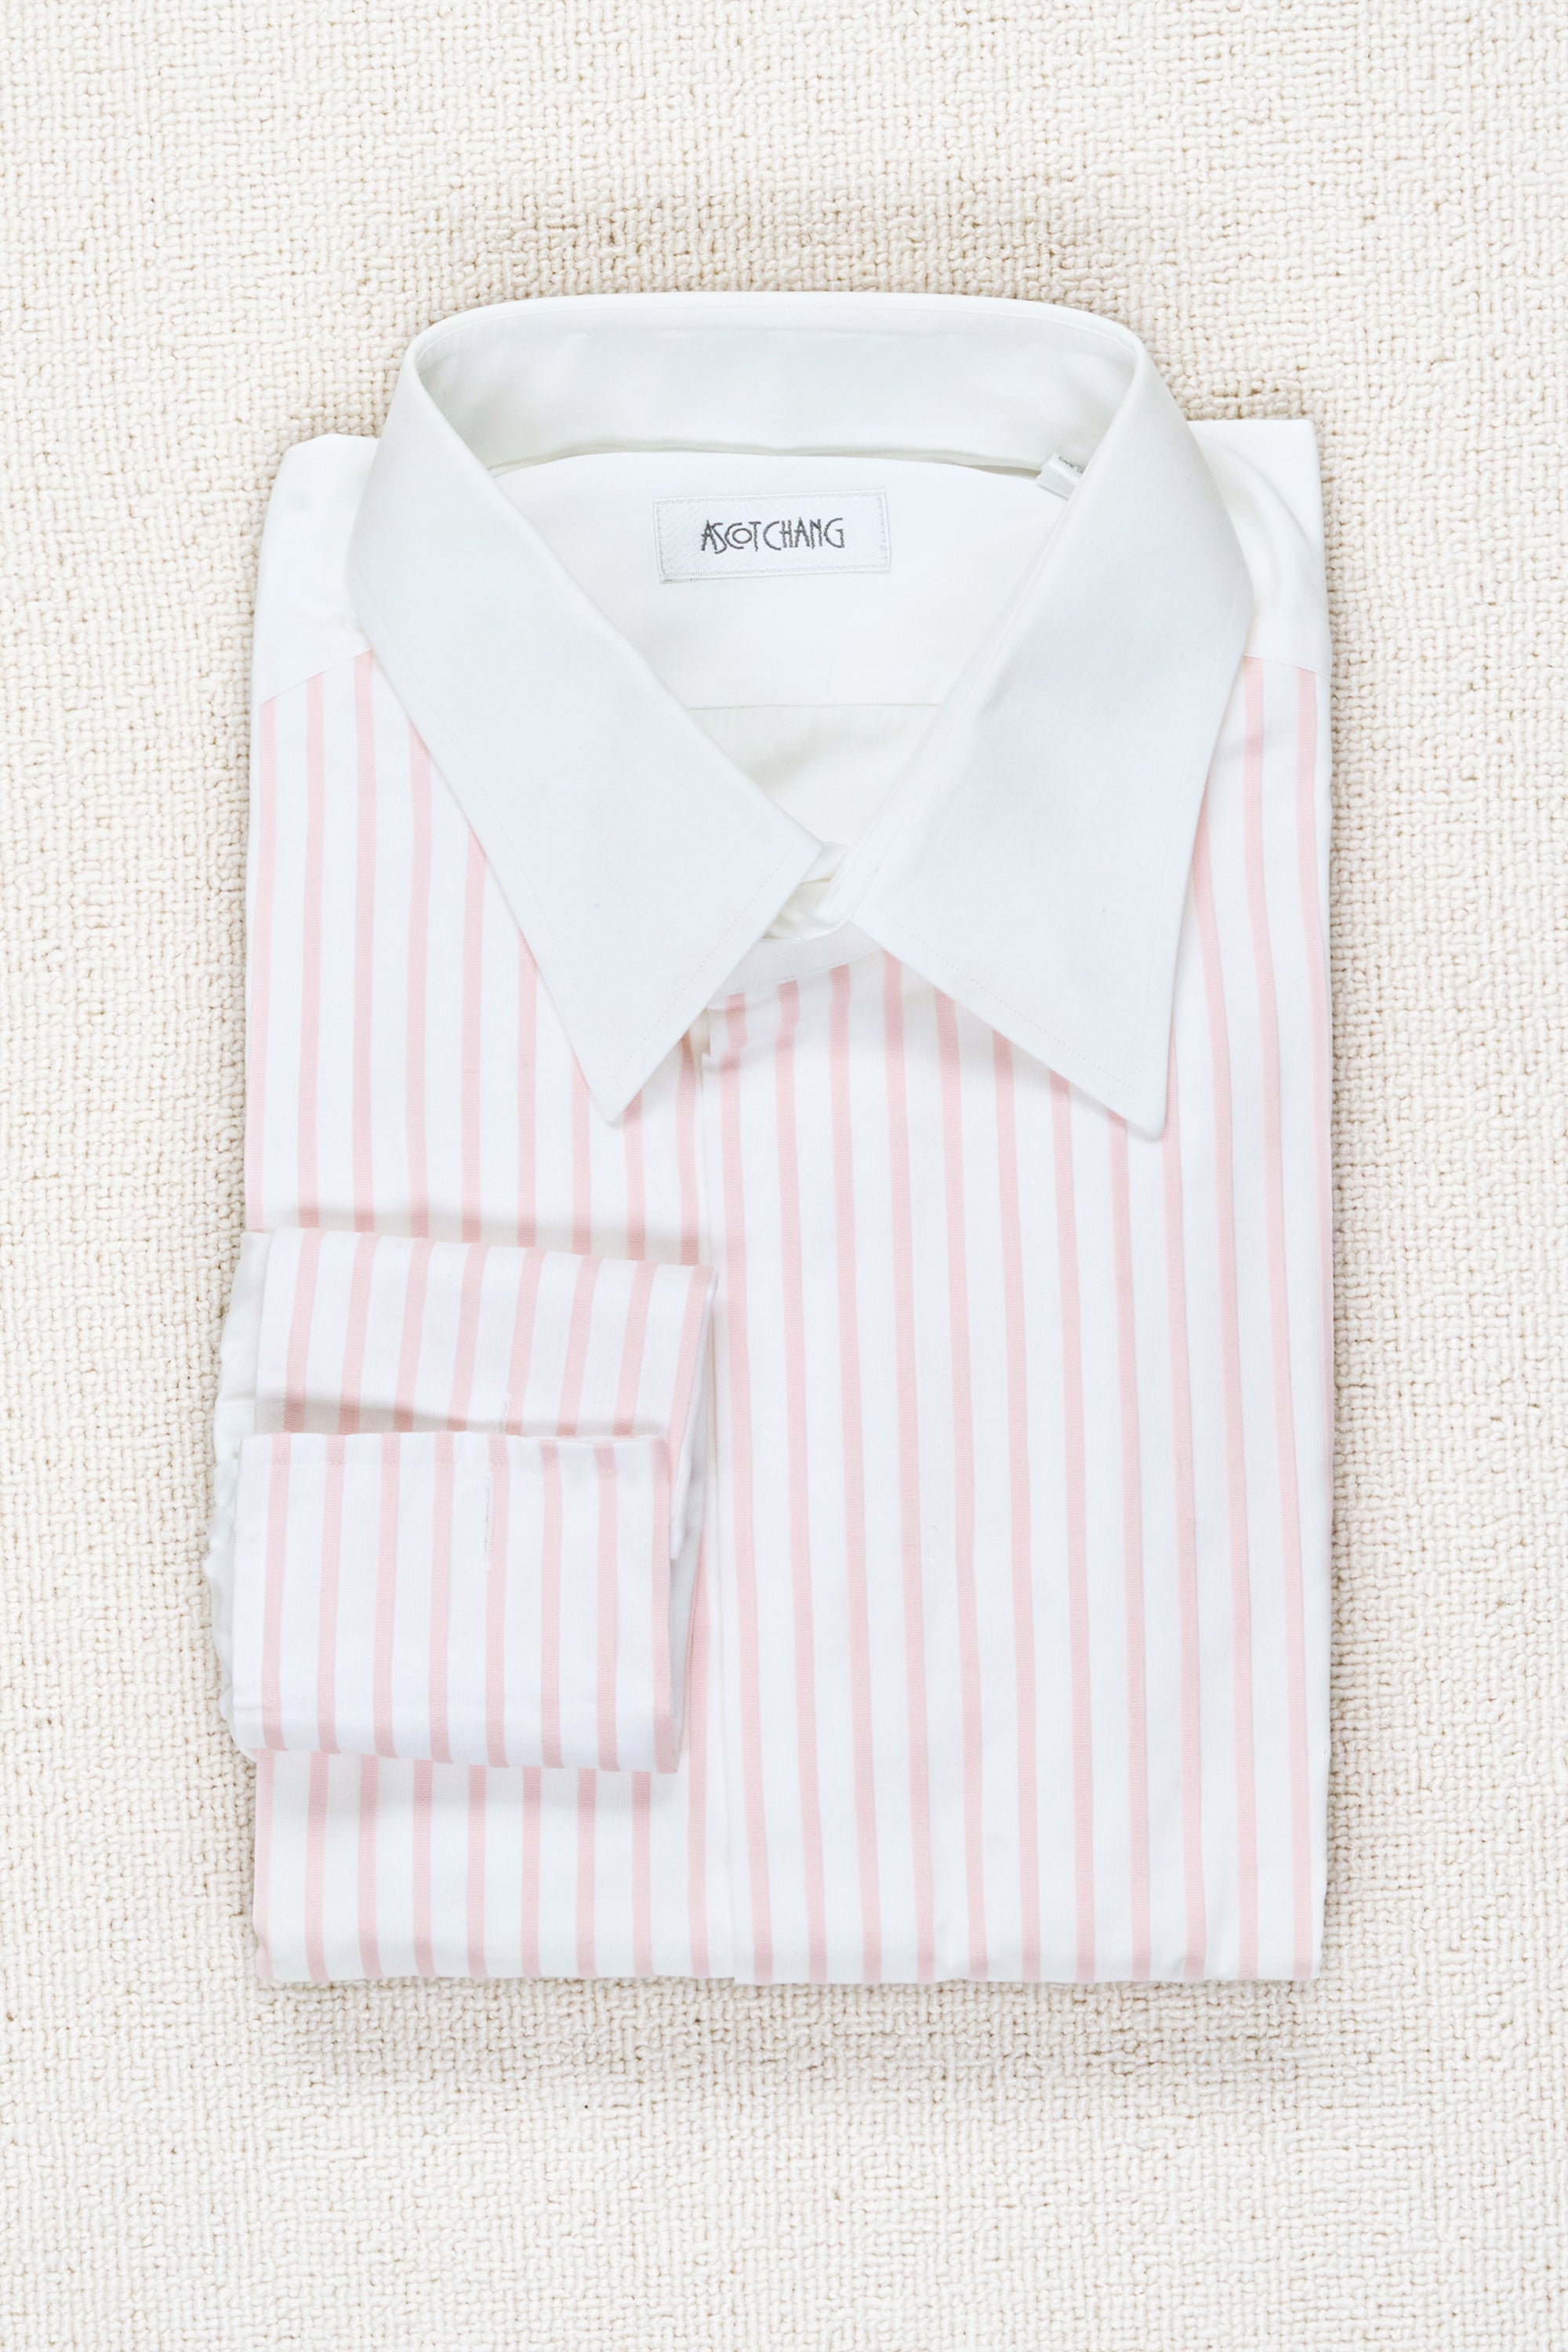 Ascot Chang Pink Pleated Bib French Cuff Tuxedo Shirt MTM